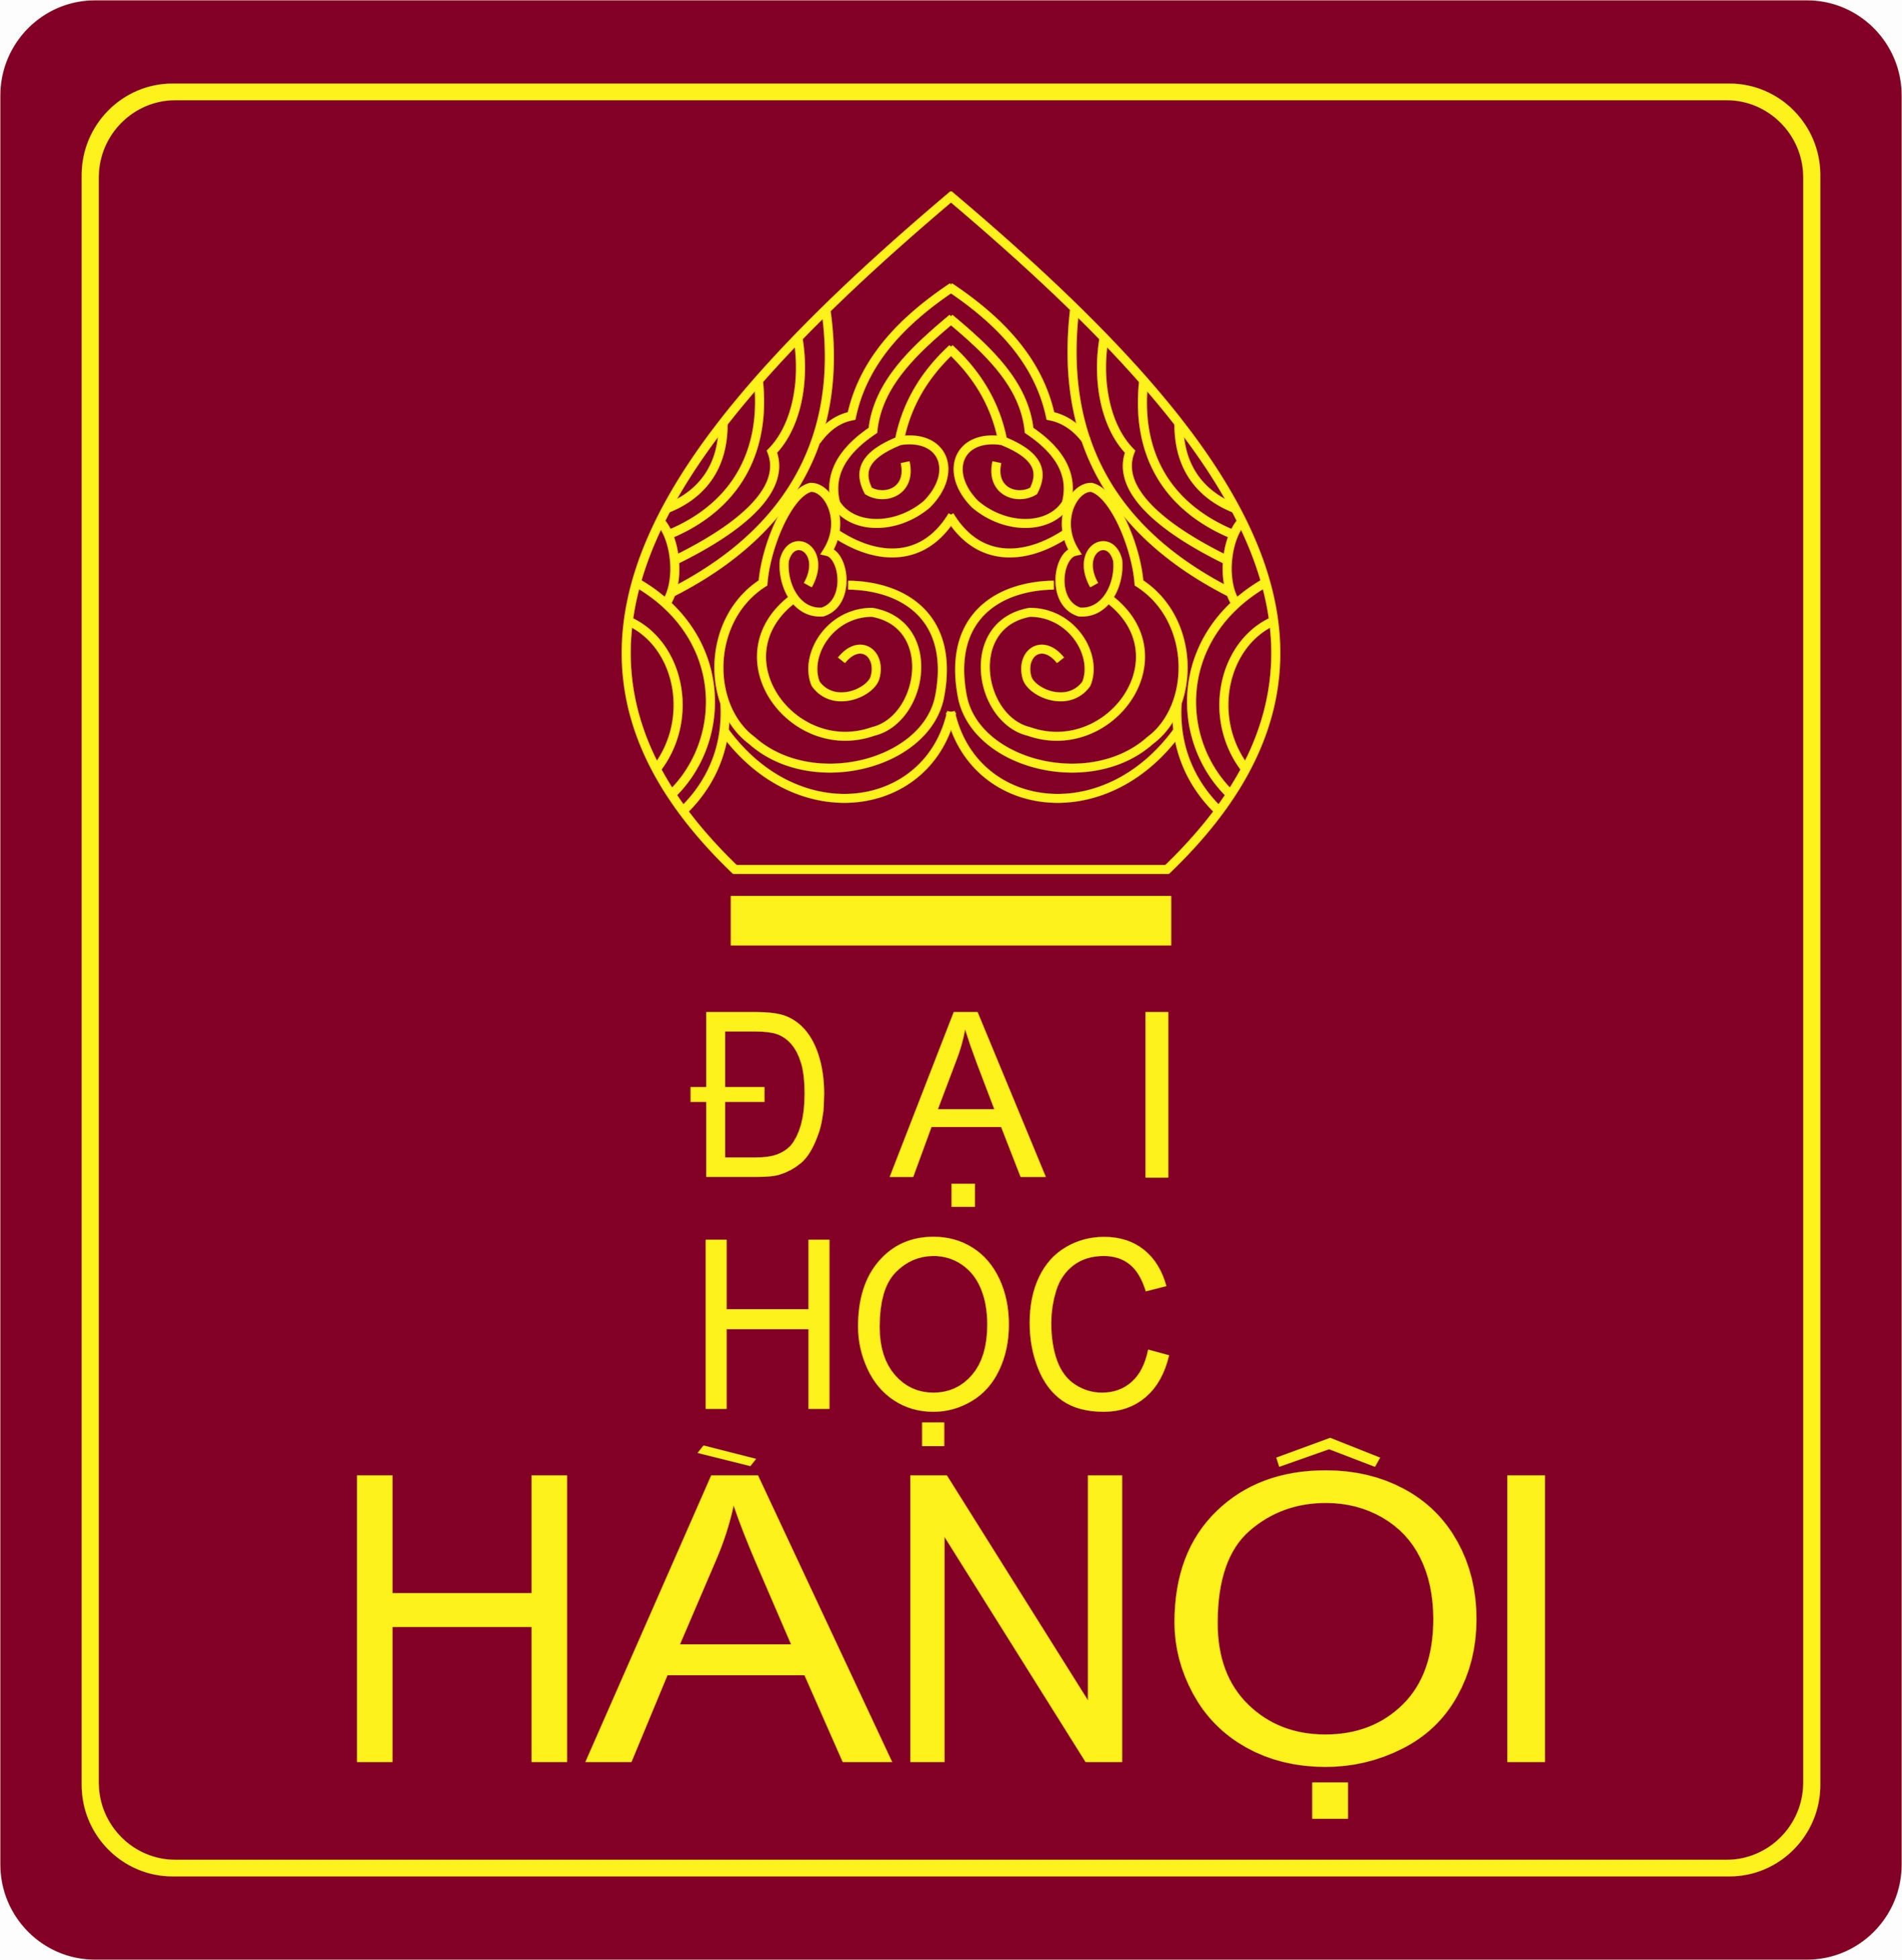 Hanoi University